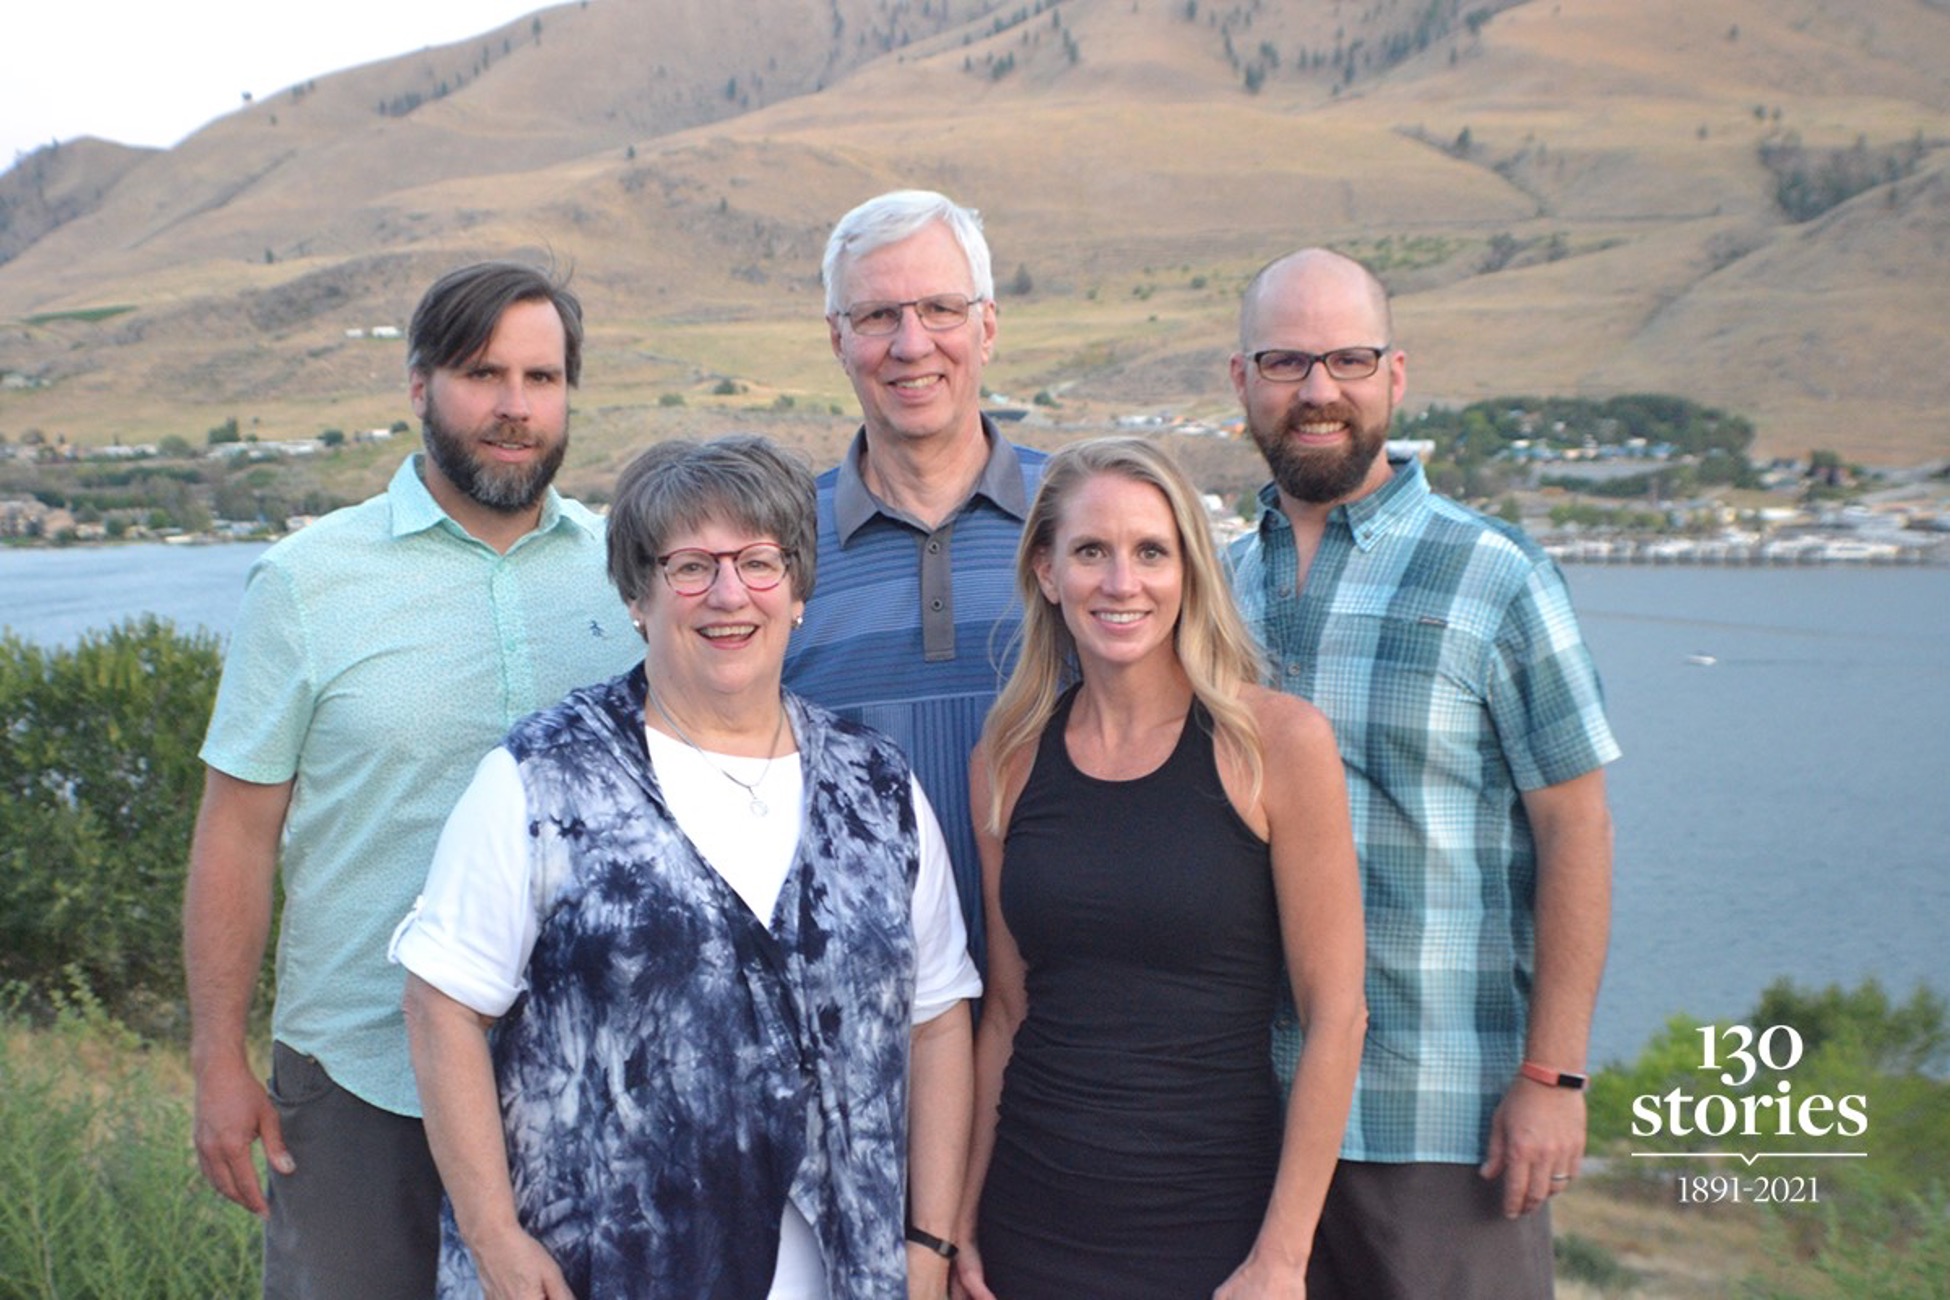 Nancy’s immediate family who are all NPU alumni, left to right: Erik Carlson, Nancy Stenberg Carlson, Ken Carlson, Ingrid Carlson Halverson, and Mark Carlson.